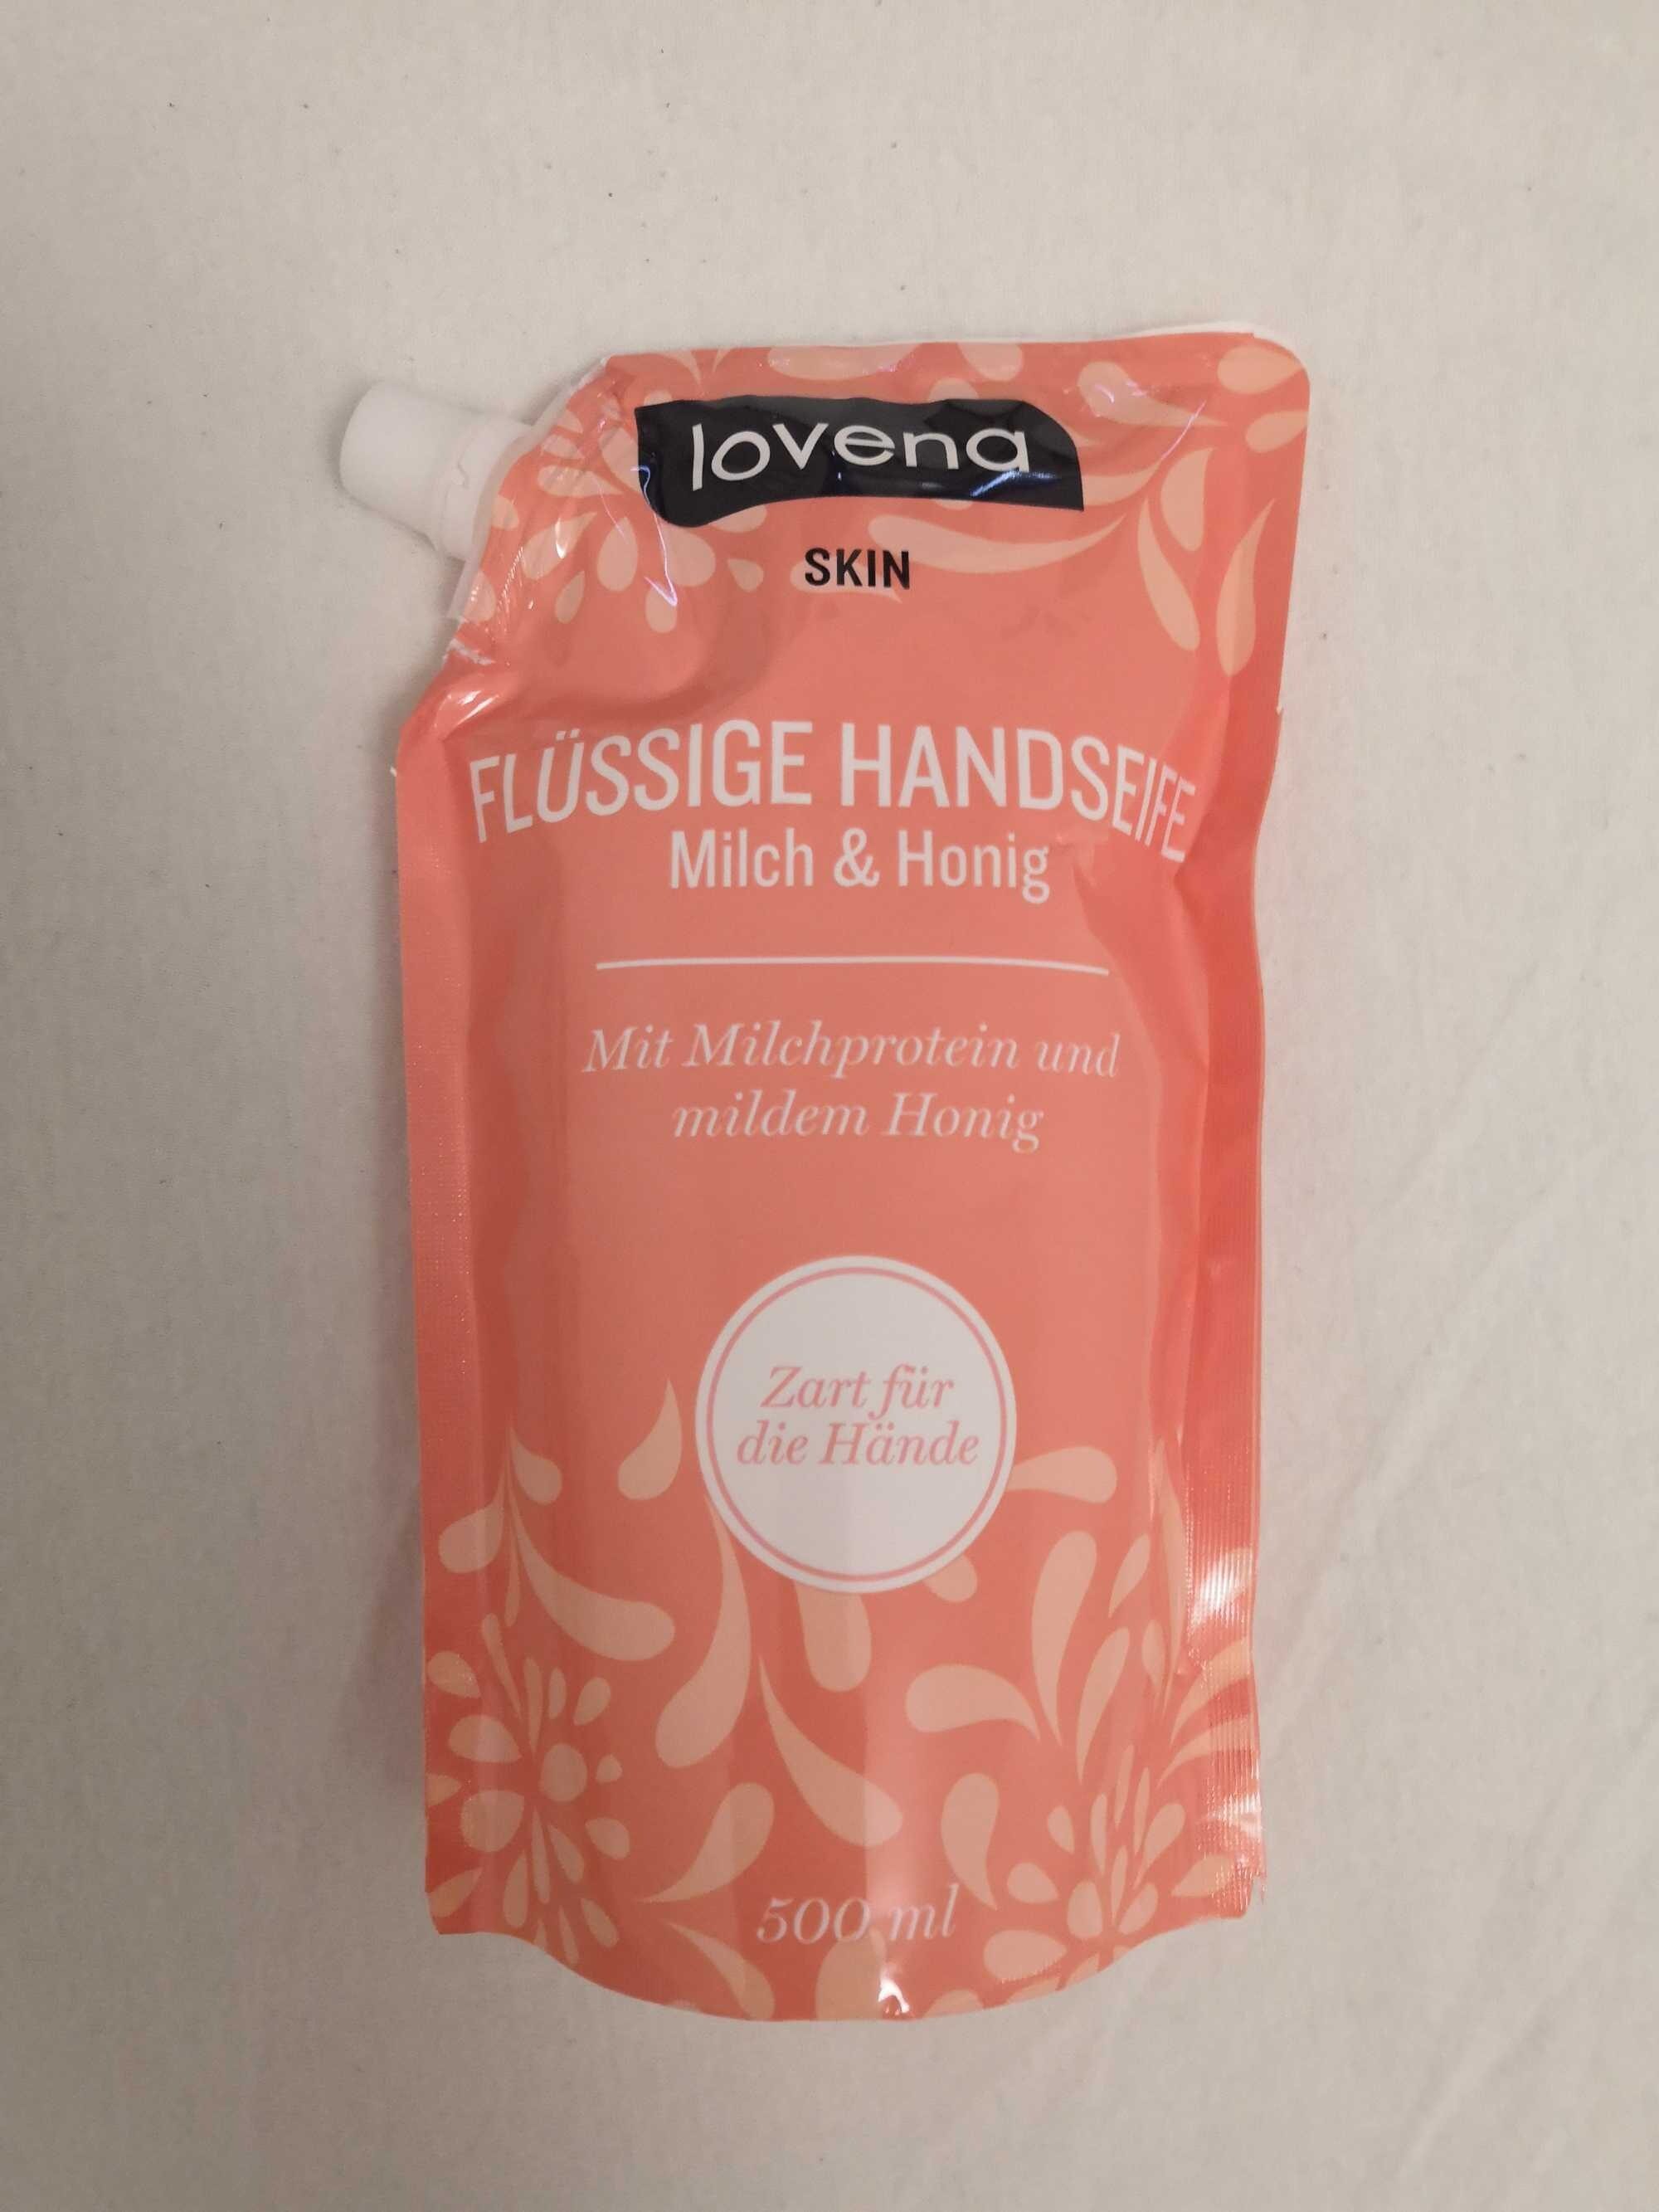 lovena Skin Flüssige Handseife Milch & Honig - Produit - de